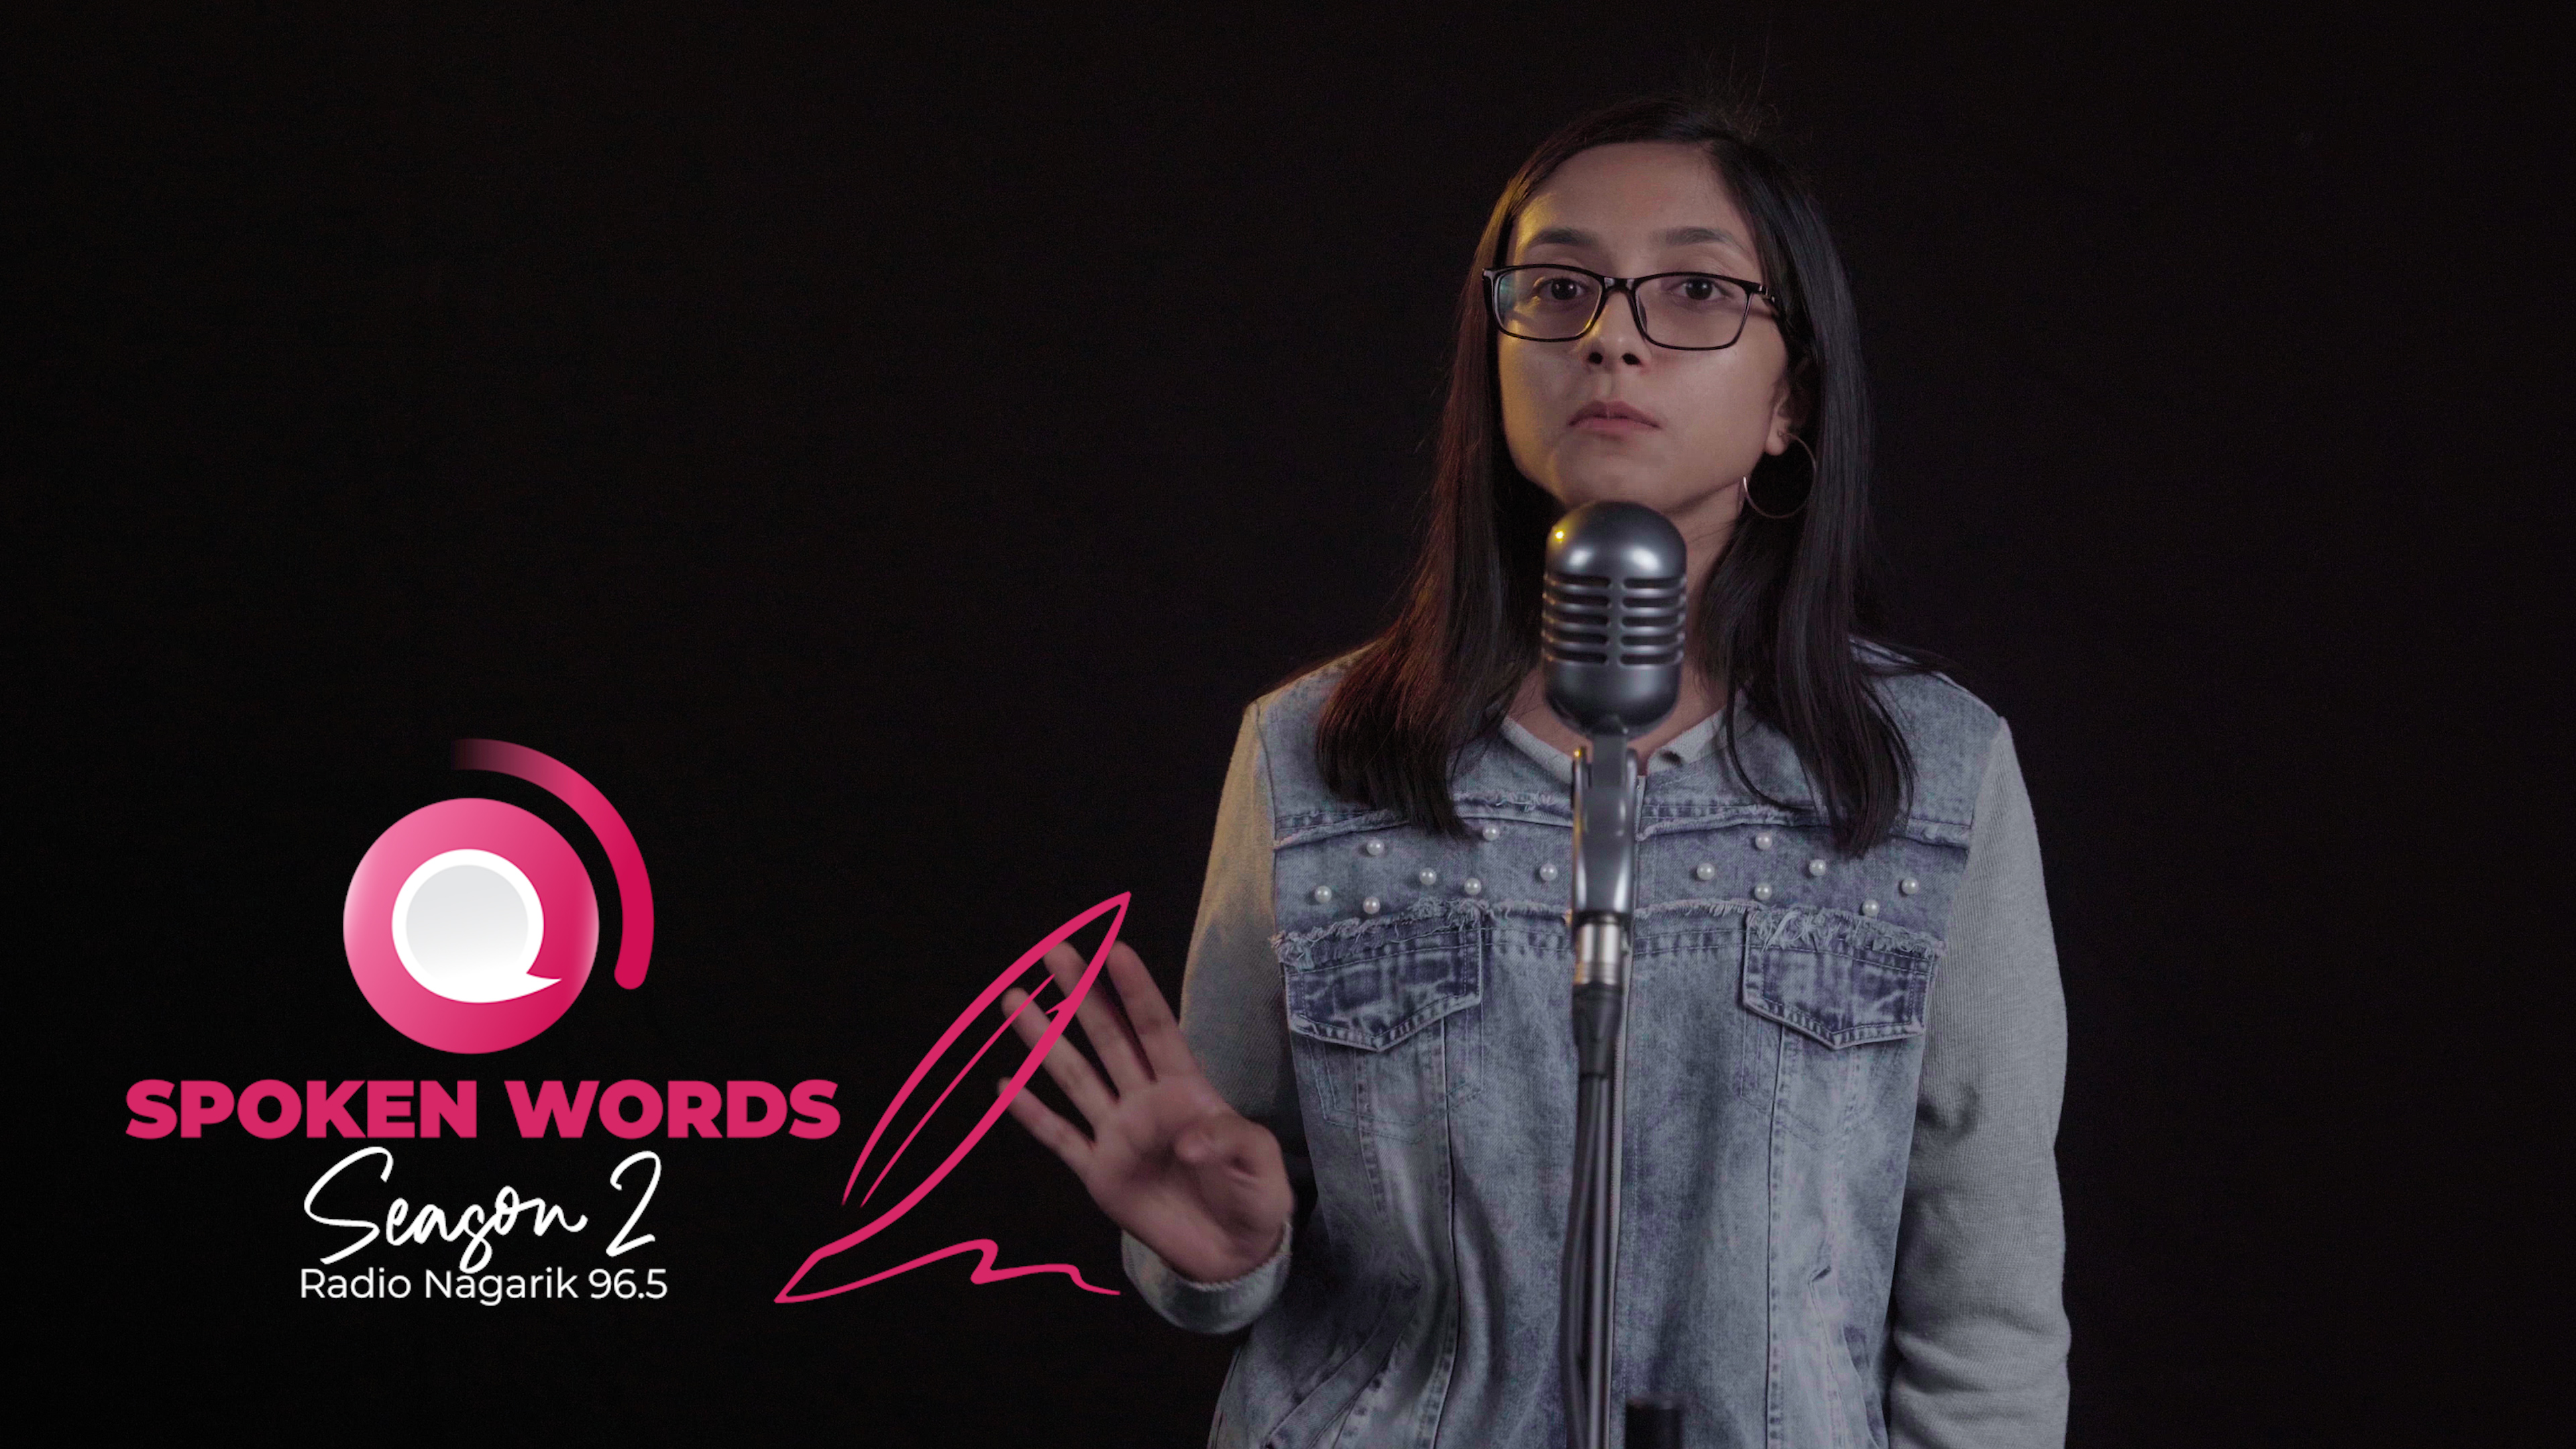 My role model does spoken words - Spoken Words | Divya Adhikari